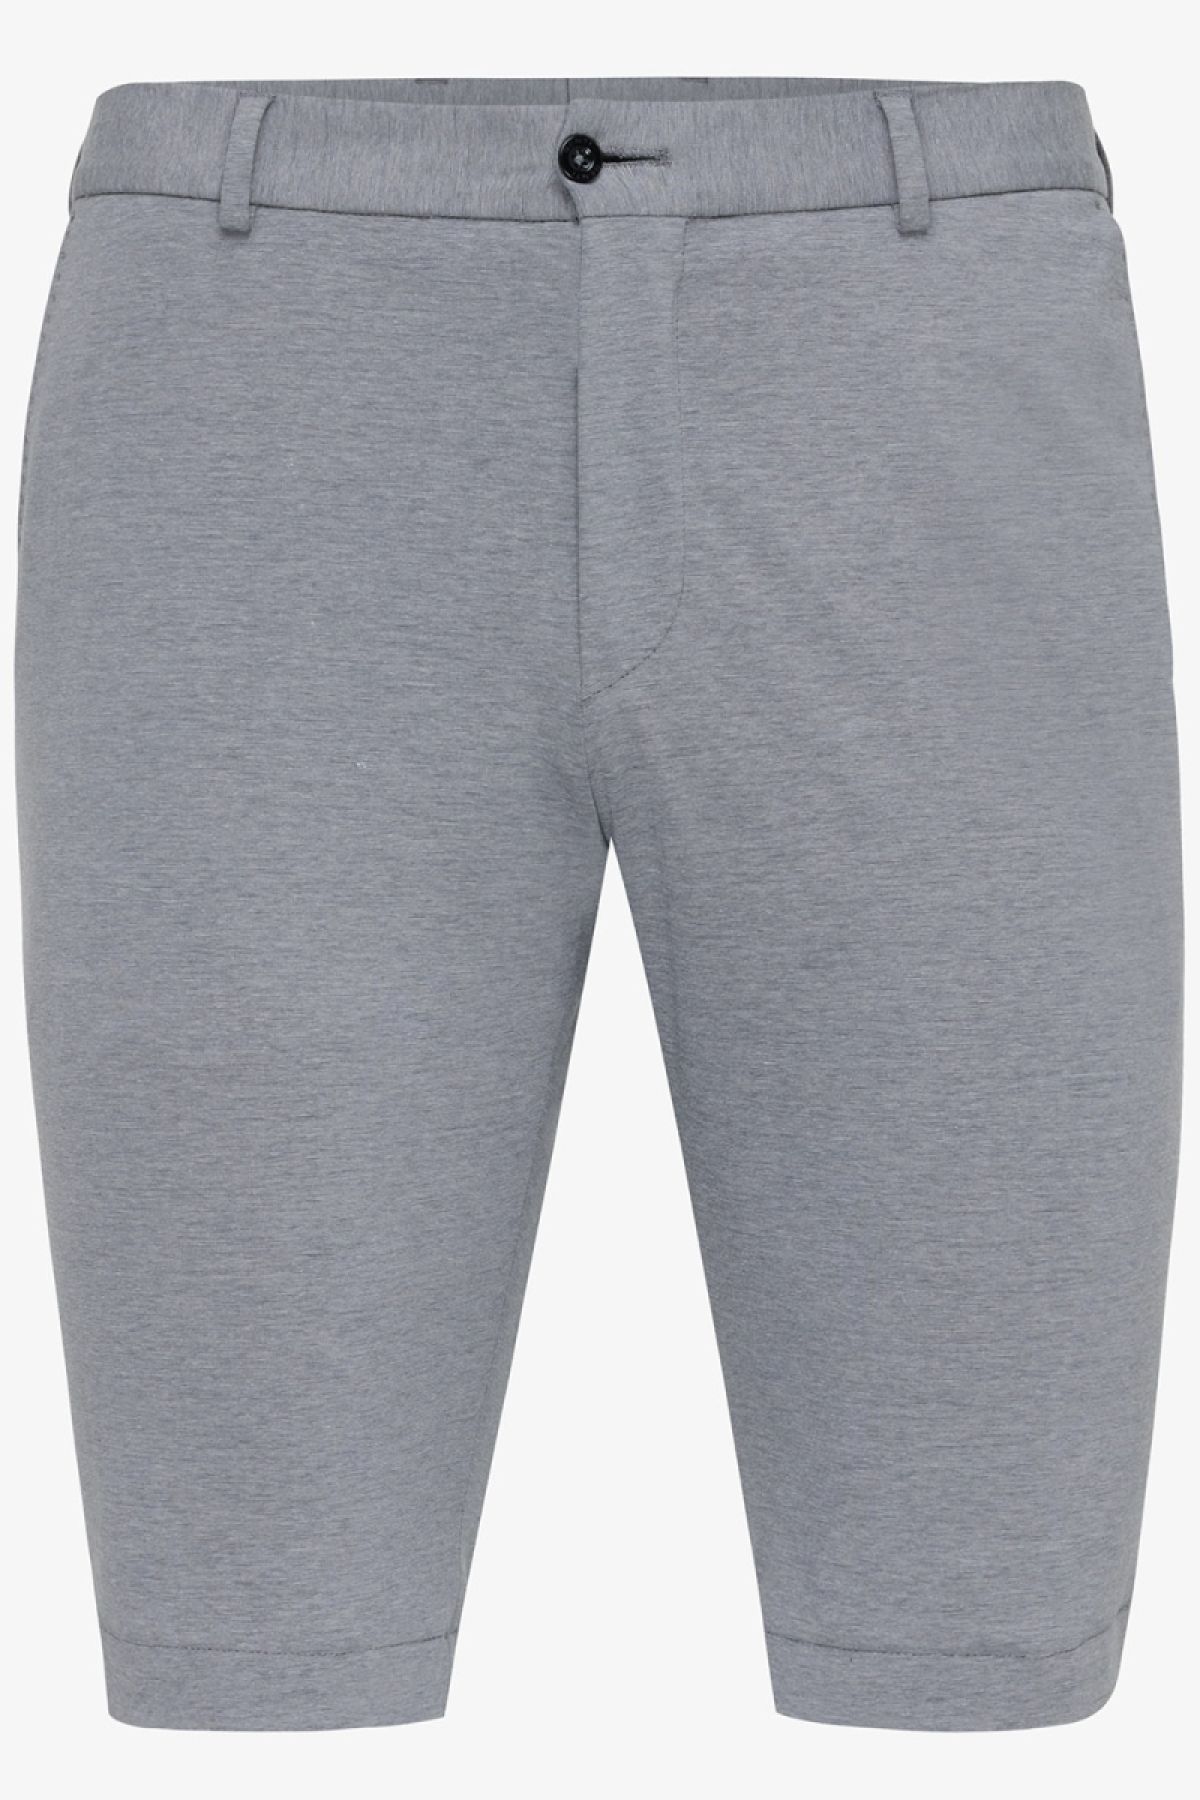 Dynamic shorts grijs